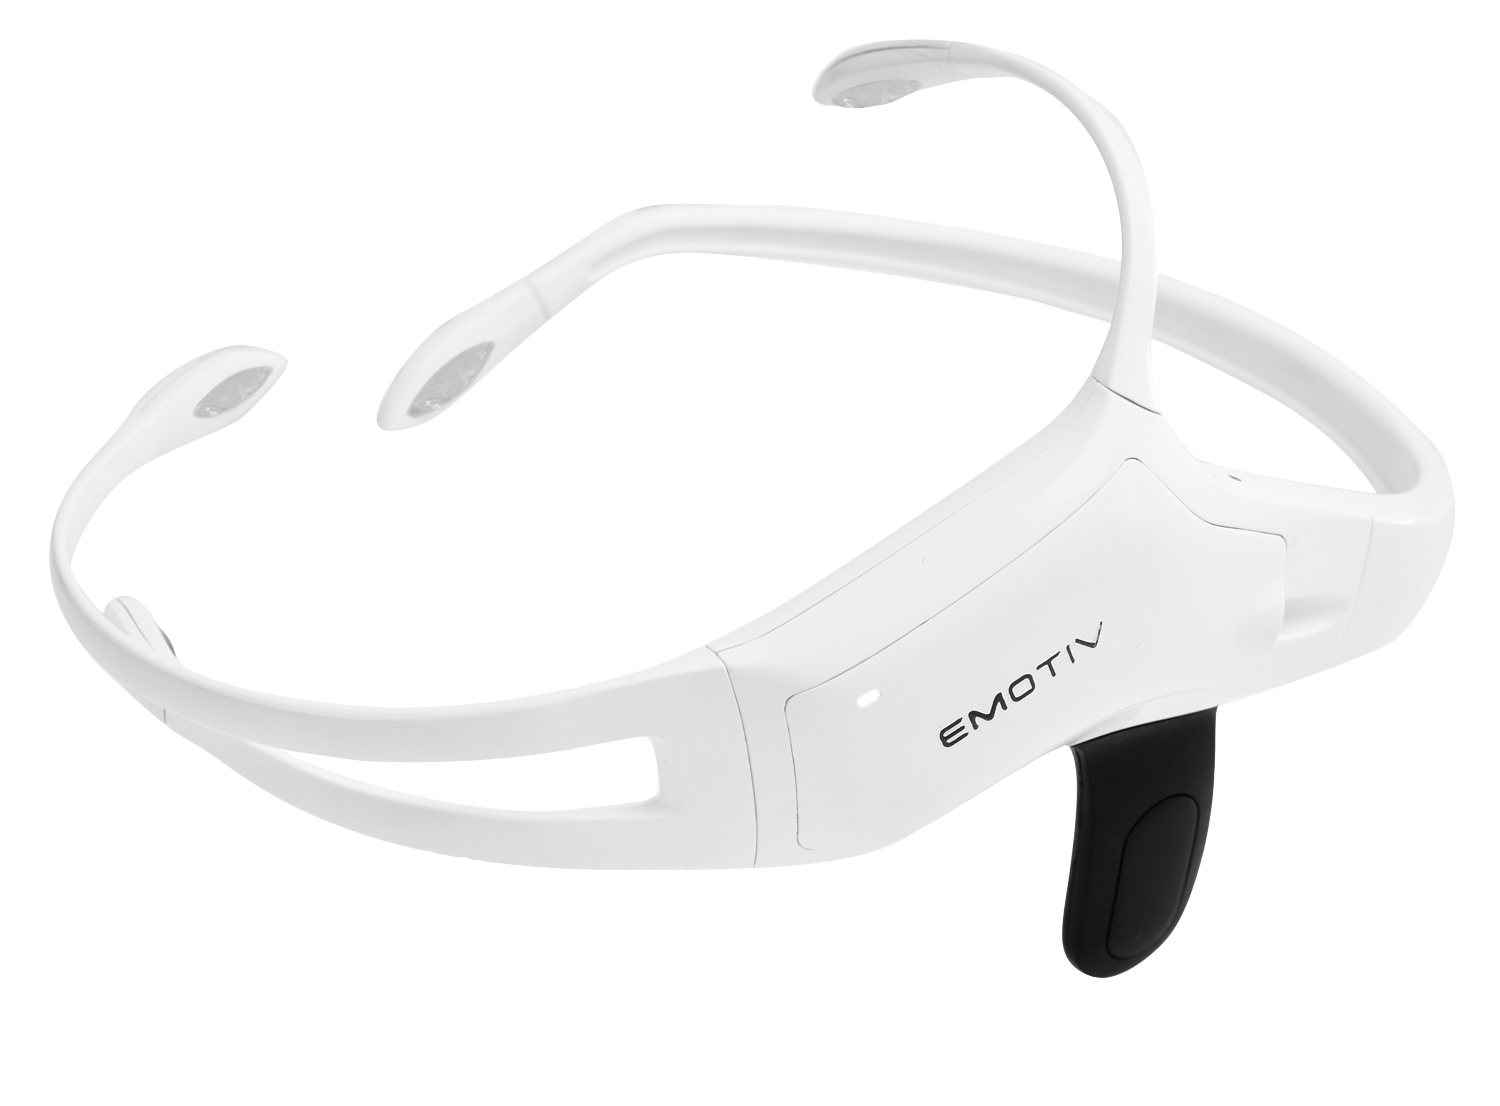 the emotiv biometric headset, used to measure brainwave patterns